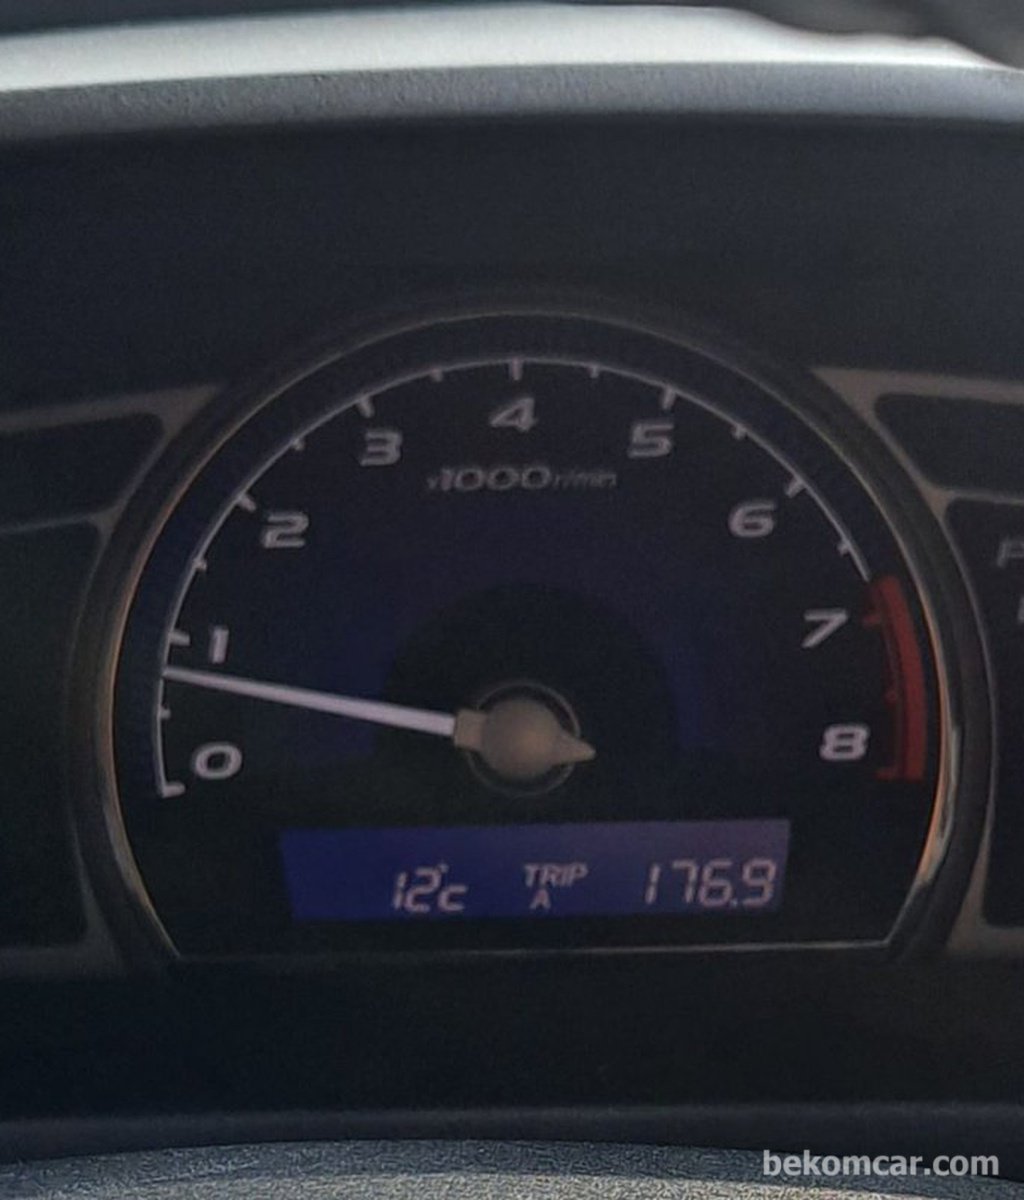 Check engine light (CEL) on your dashboard|bekomcar.com